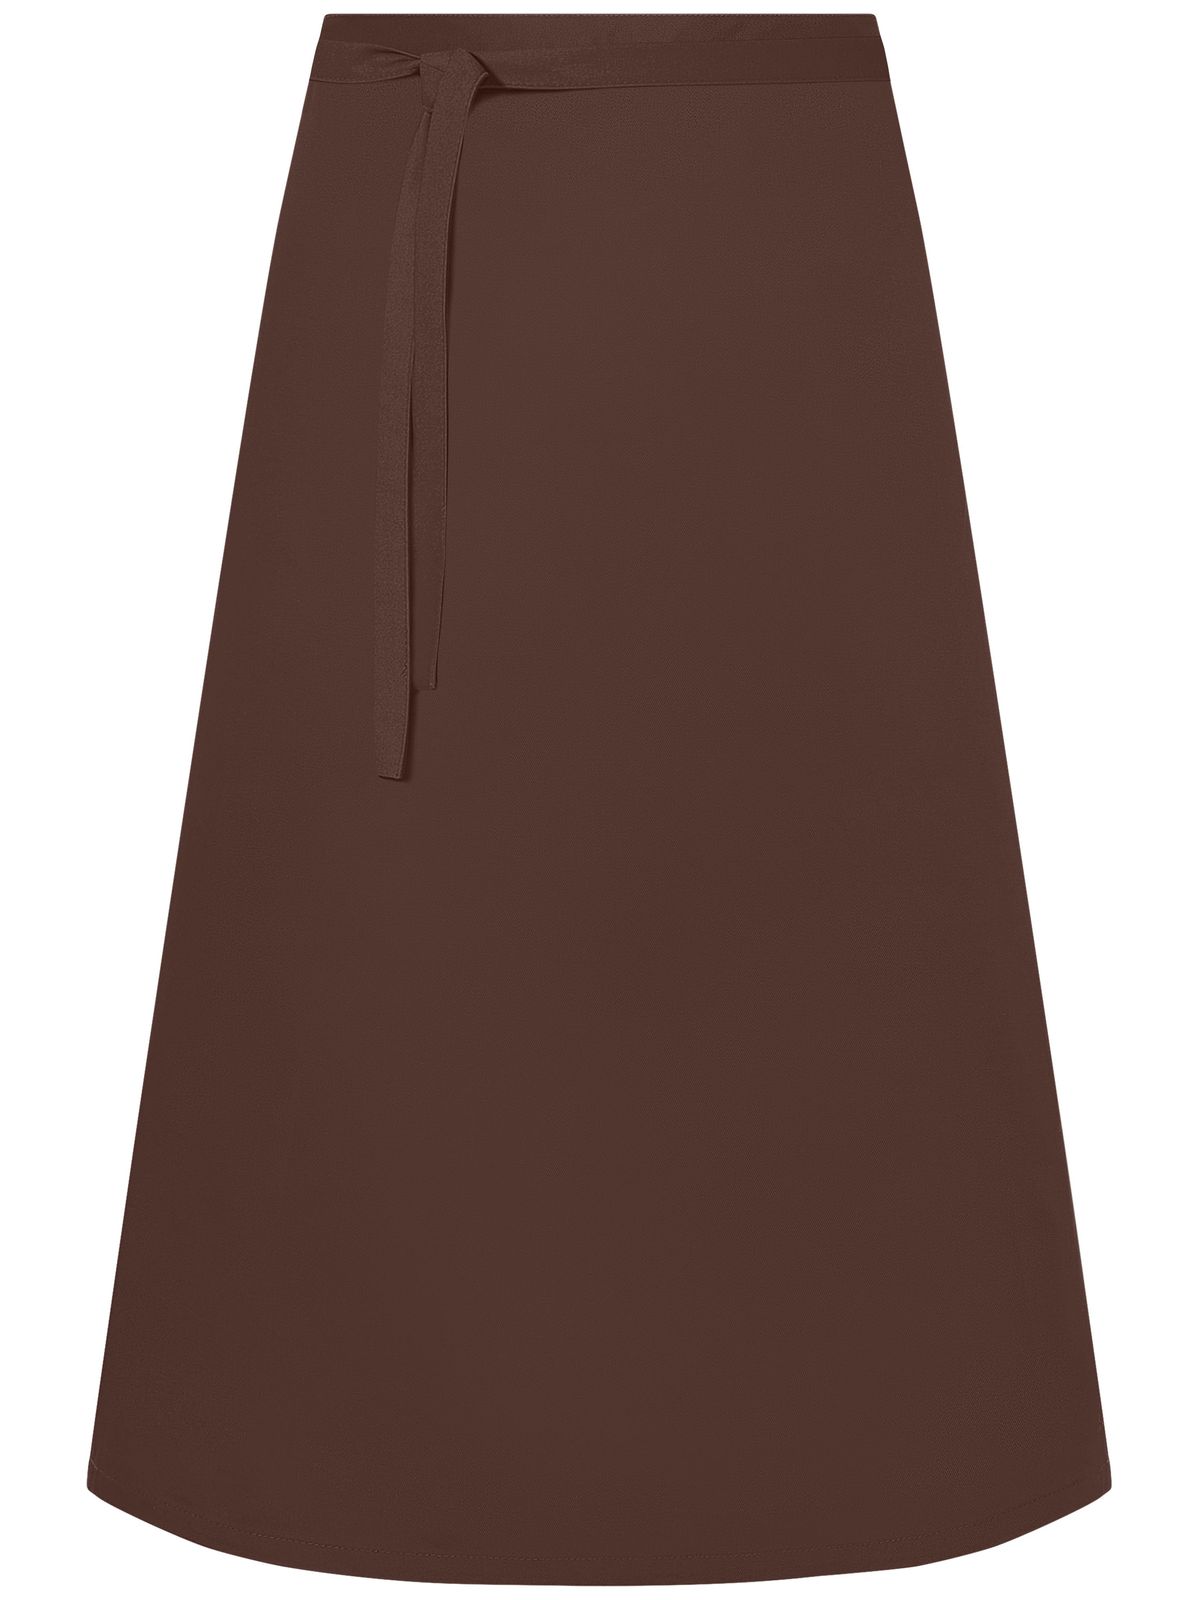 apron-long-brown.webp